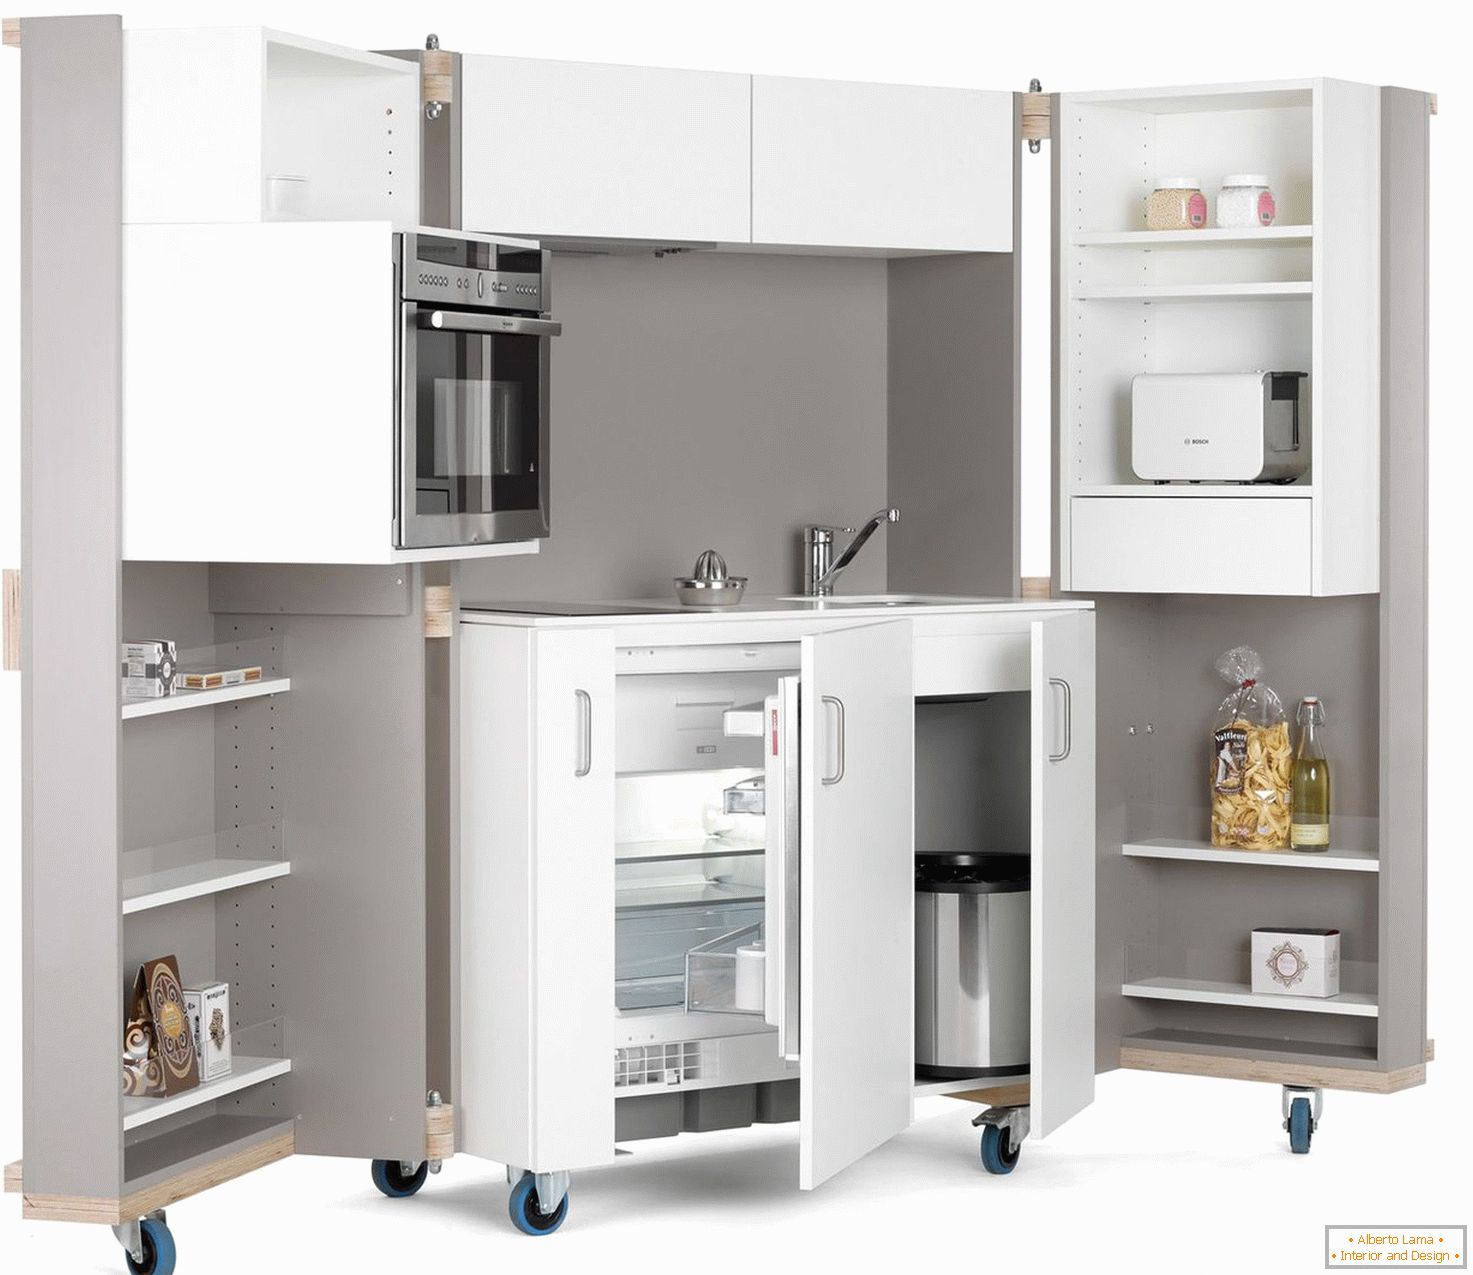 A small designer kitchen on wheels